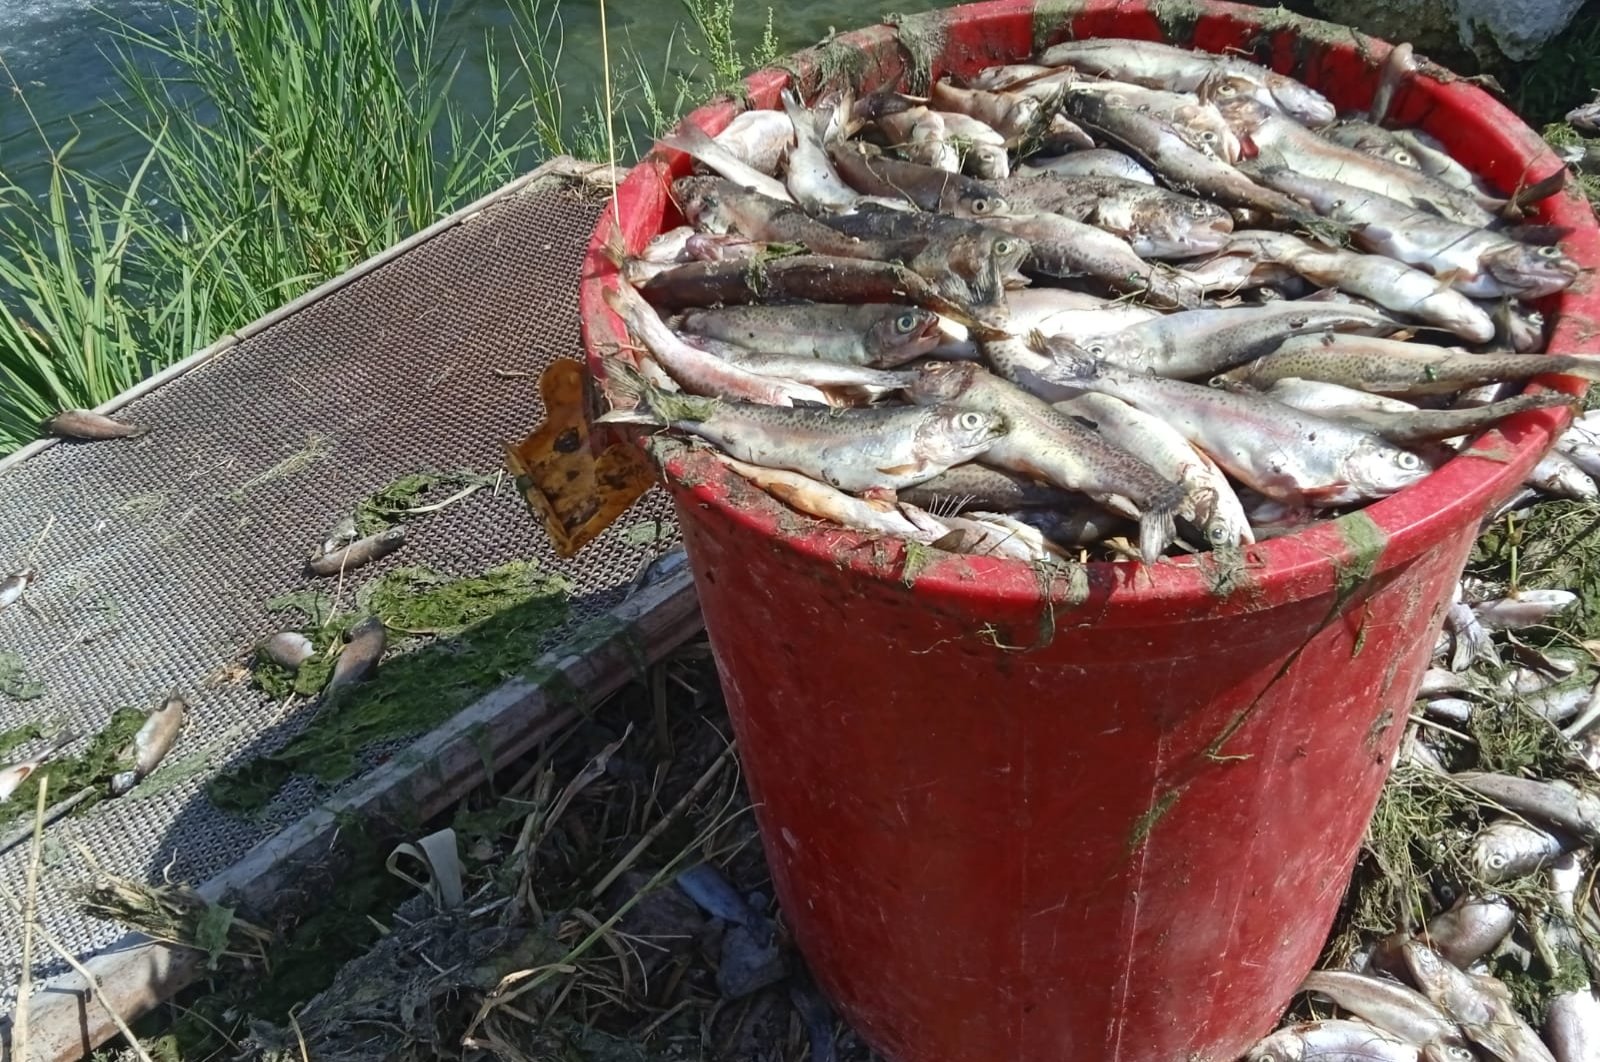 Some 325 tons of trout die from oxygen deprivation in Türkiye’s Van